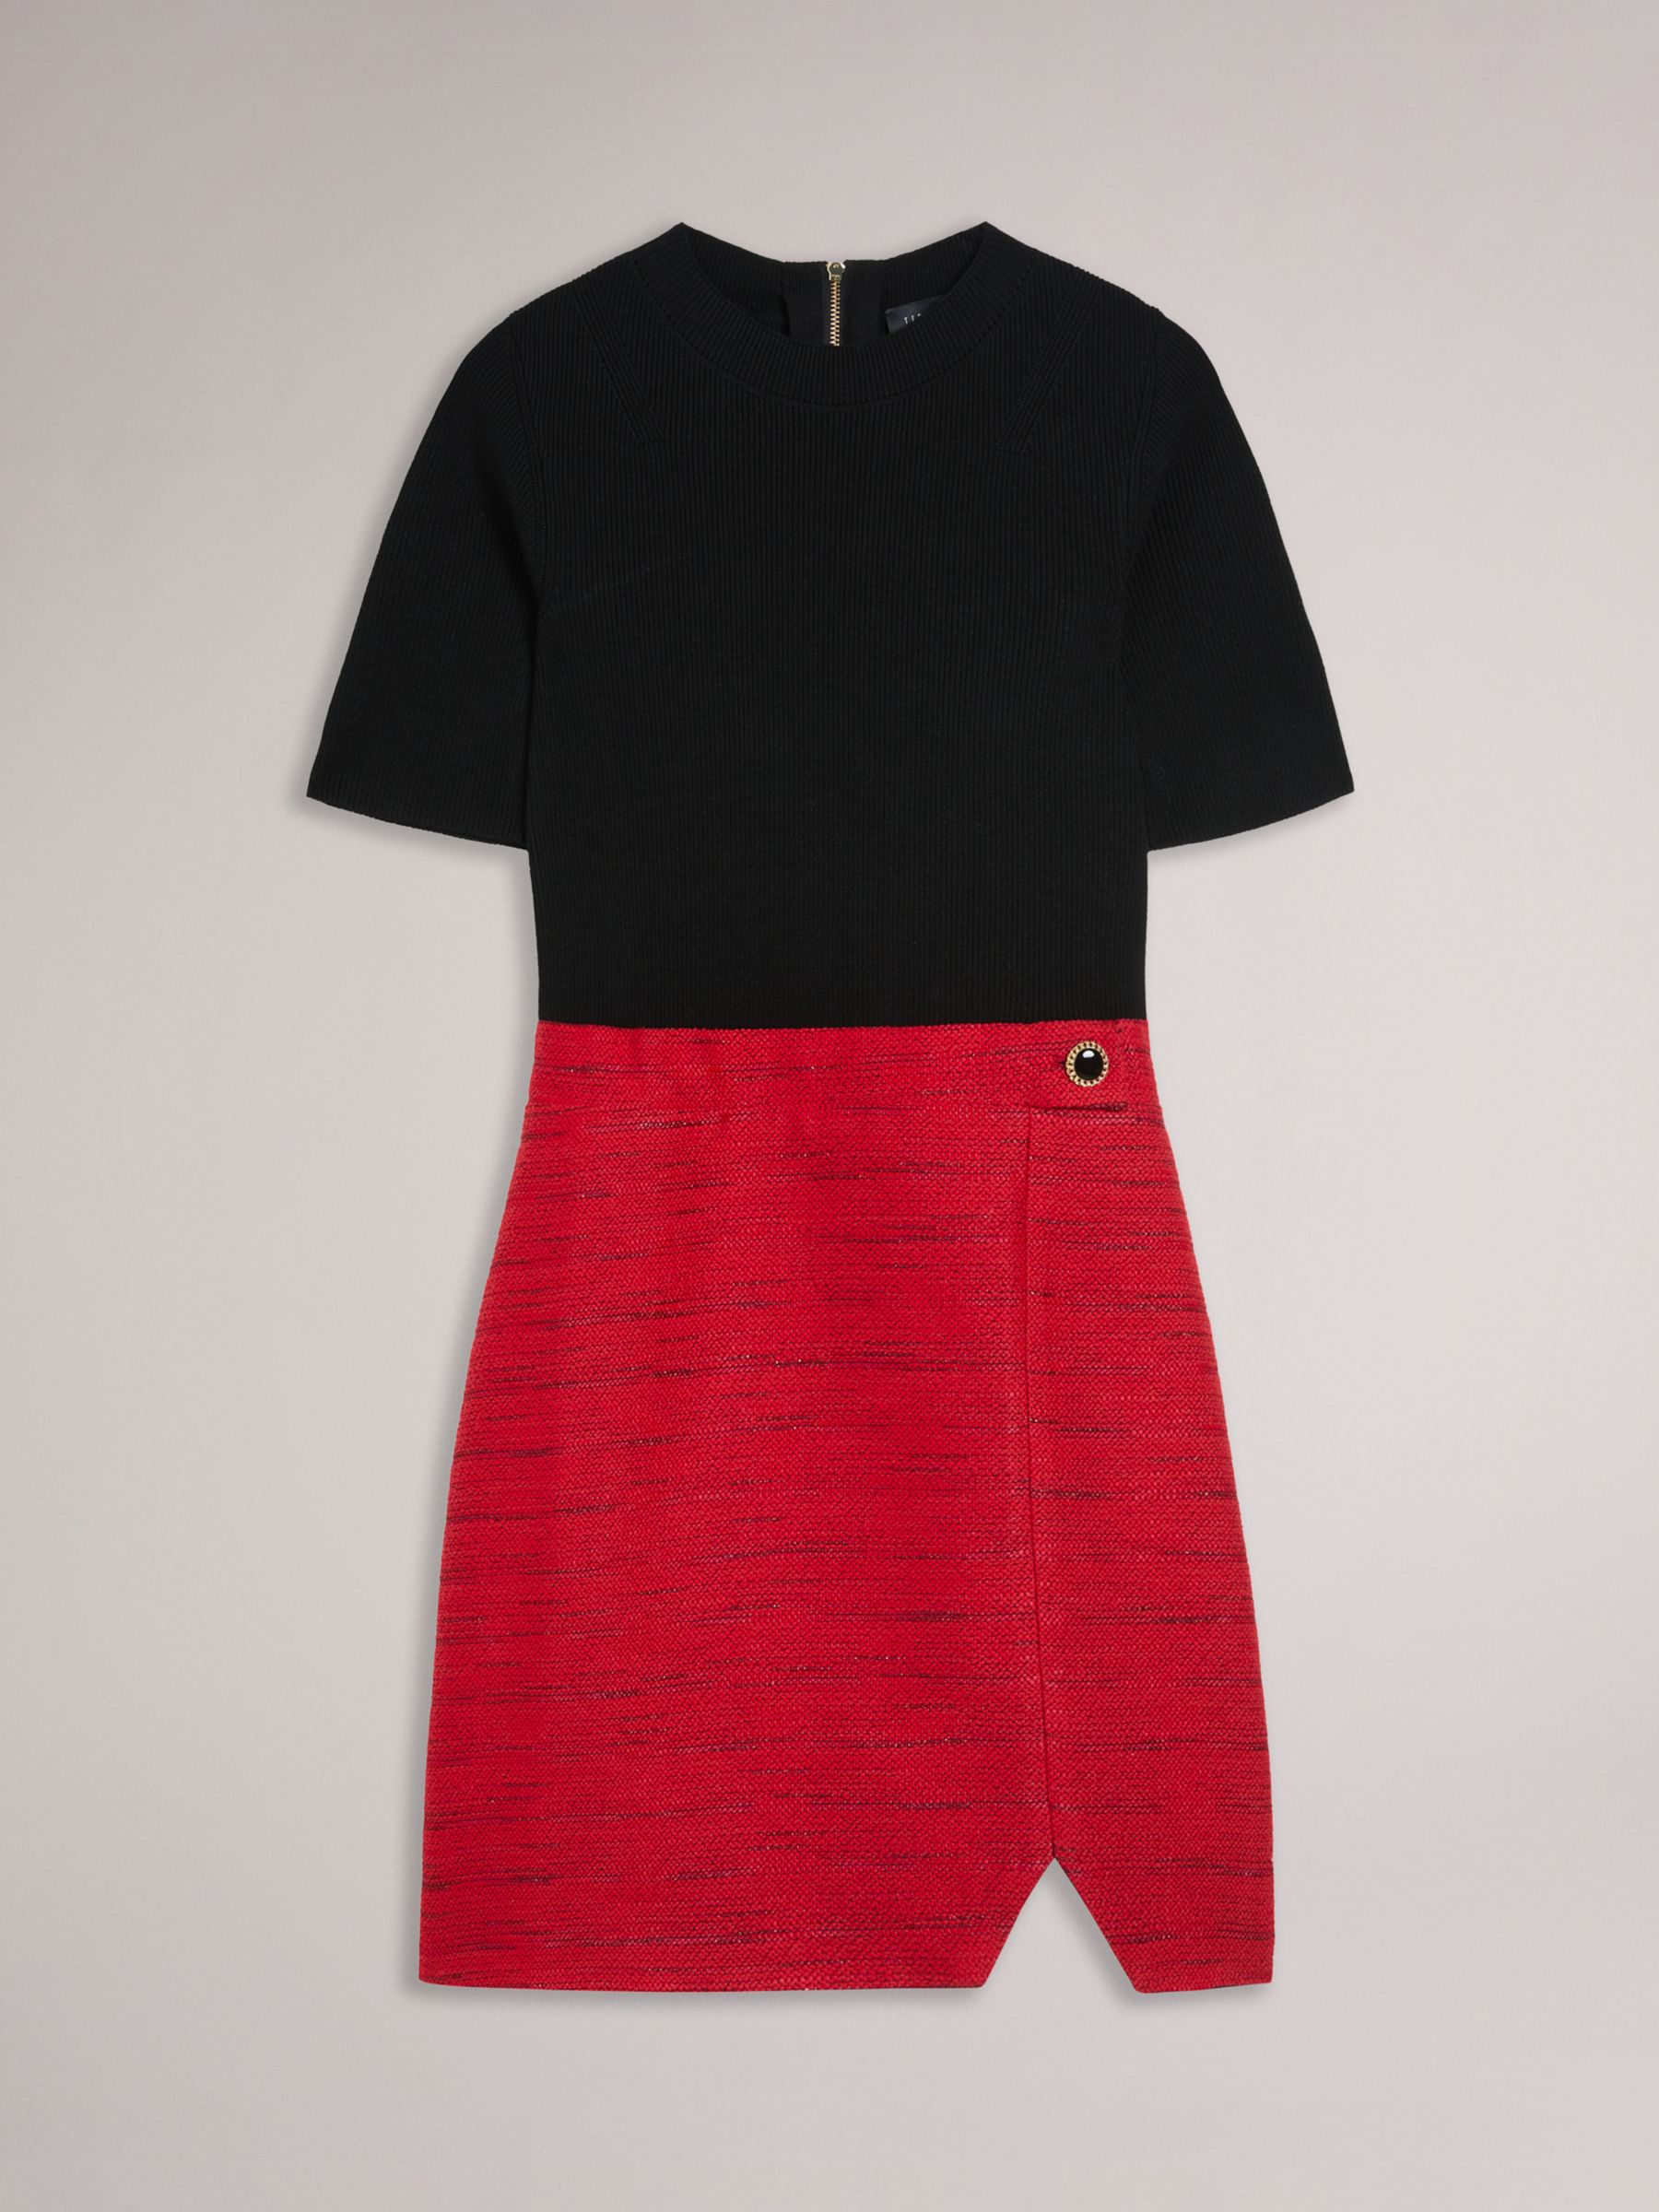 Ted Baker Illusion Mini Dress, Black/Red, 10